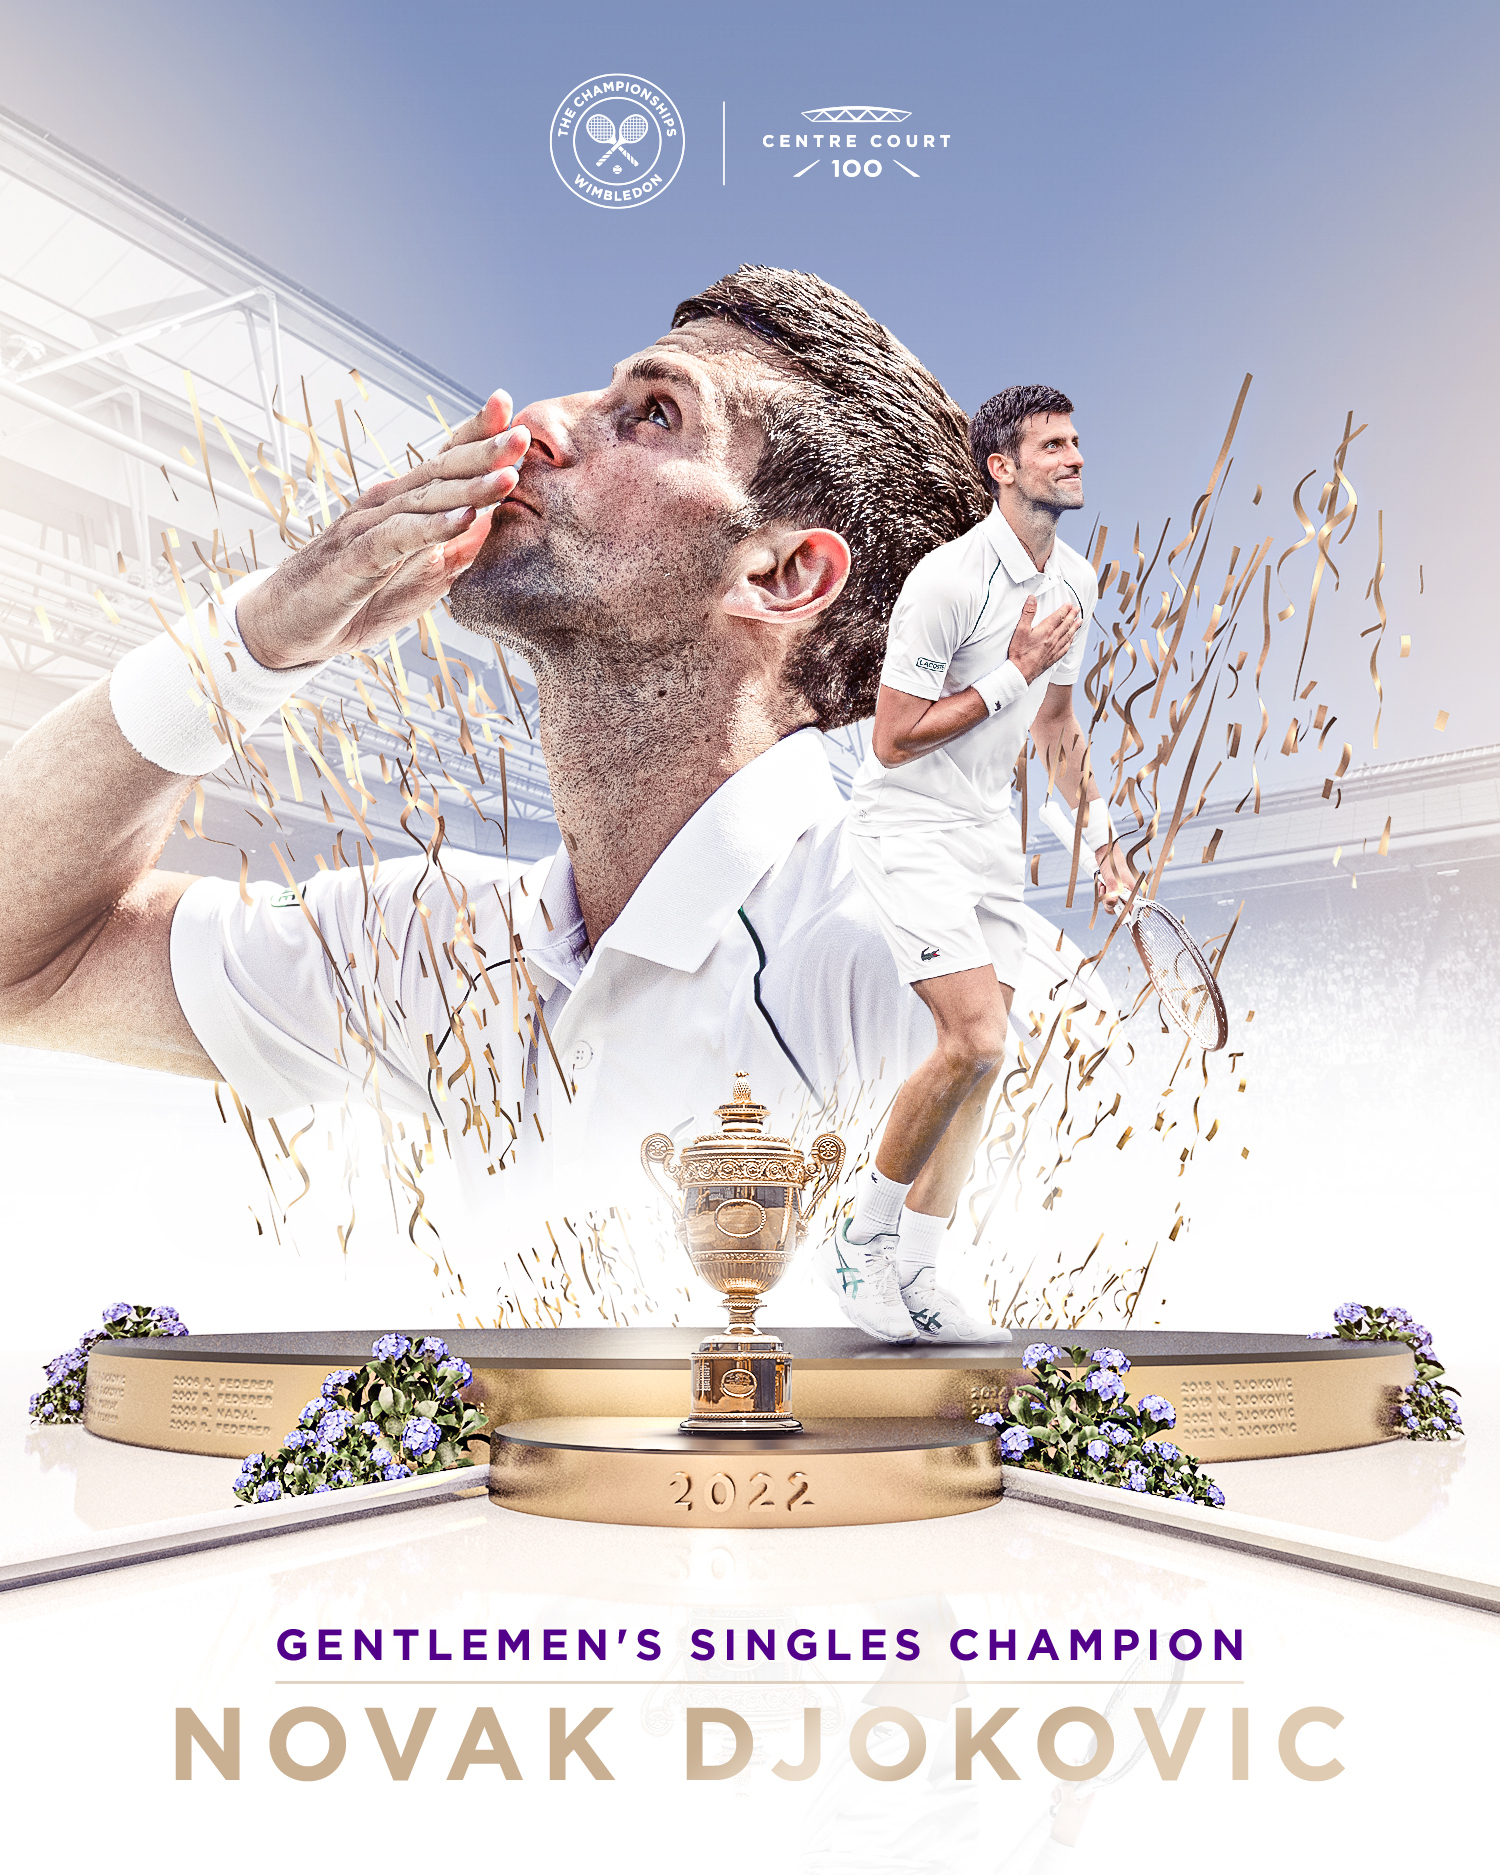 Djokovic levantó su cuarto Wimbledon de forma consecutiva este fin de semana. Foto: Wimbledon.